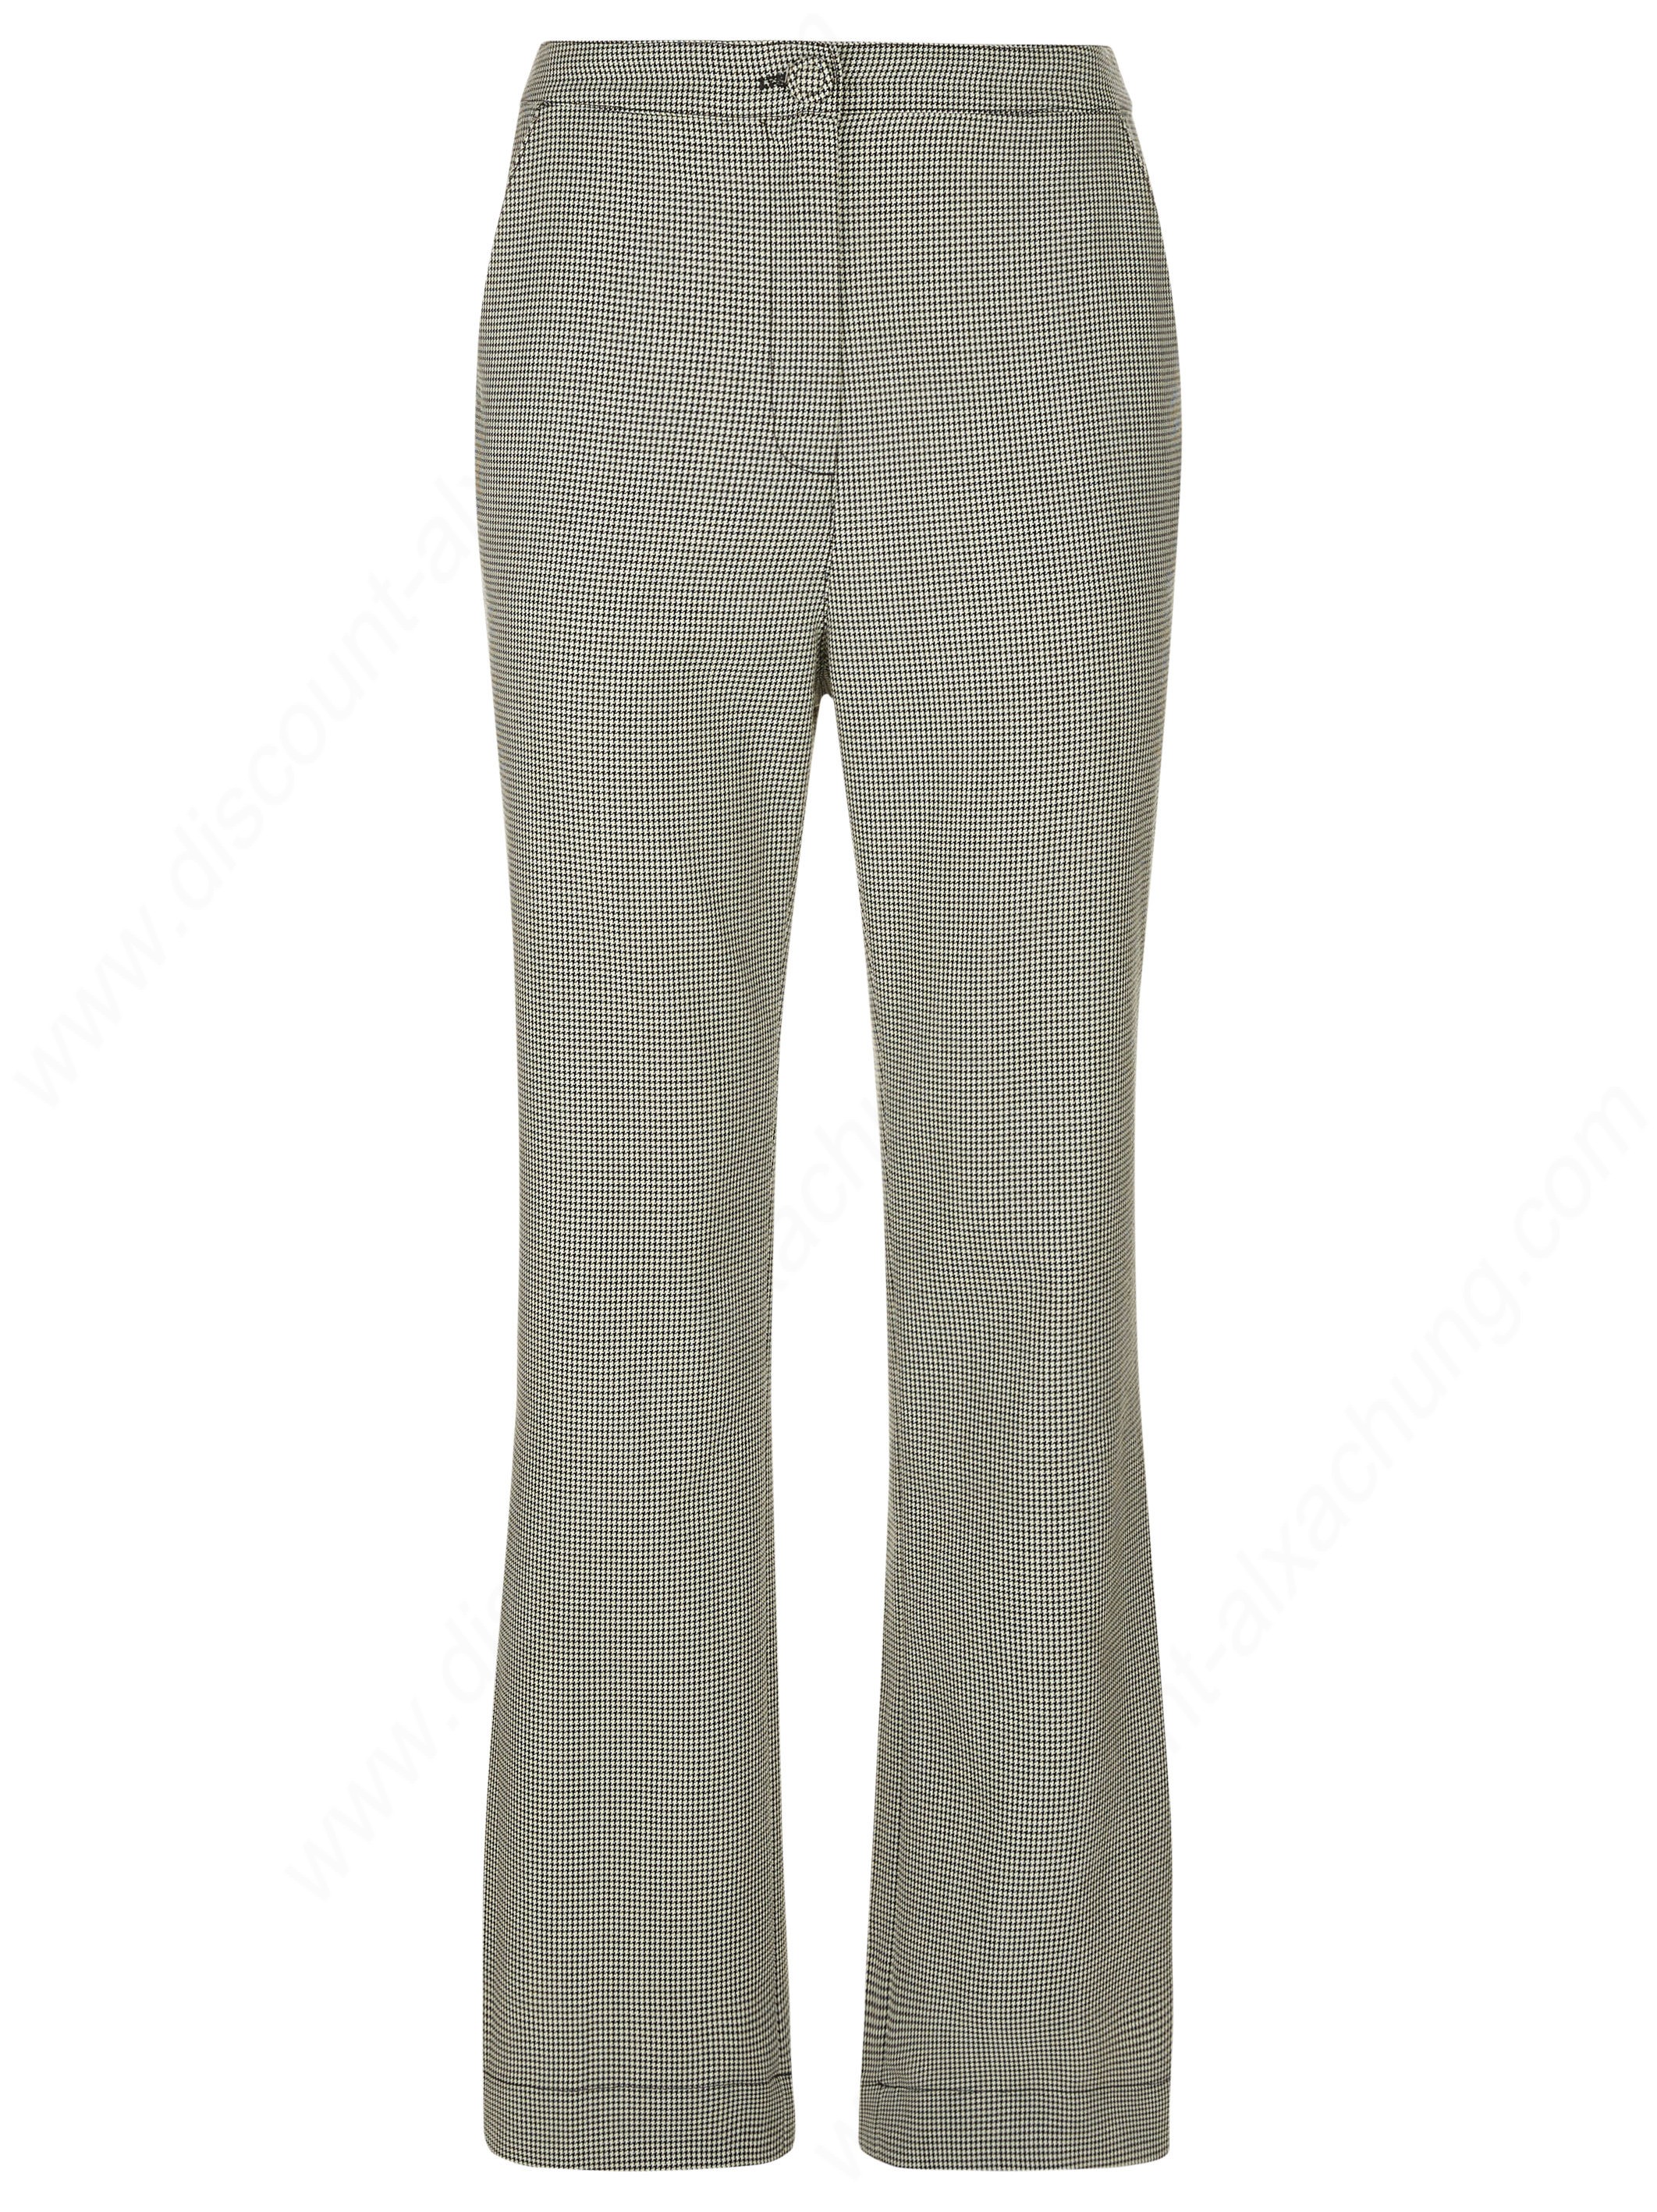 Alexachung Tailored Crop Flare Trouser - Alexachung Tailored Crop Flare Trouser